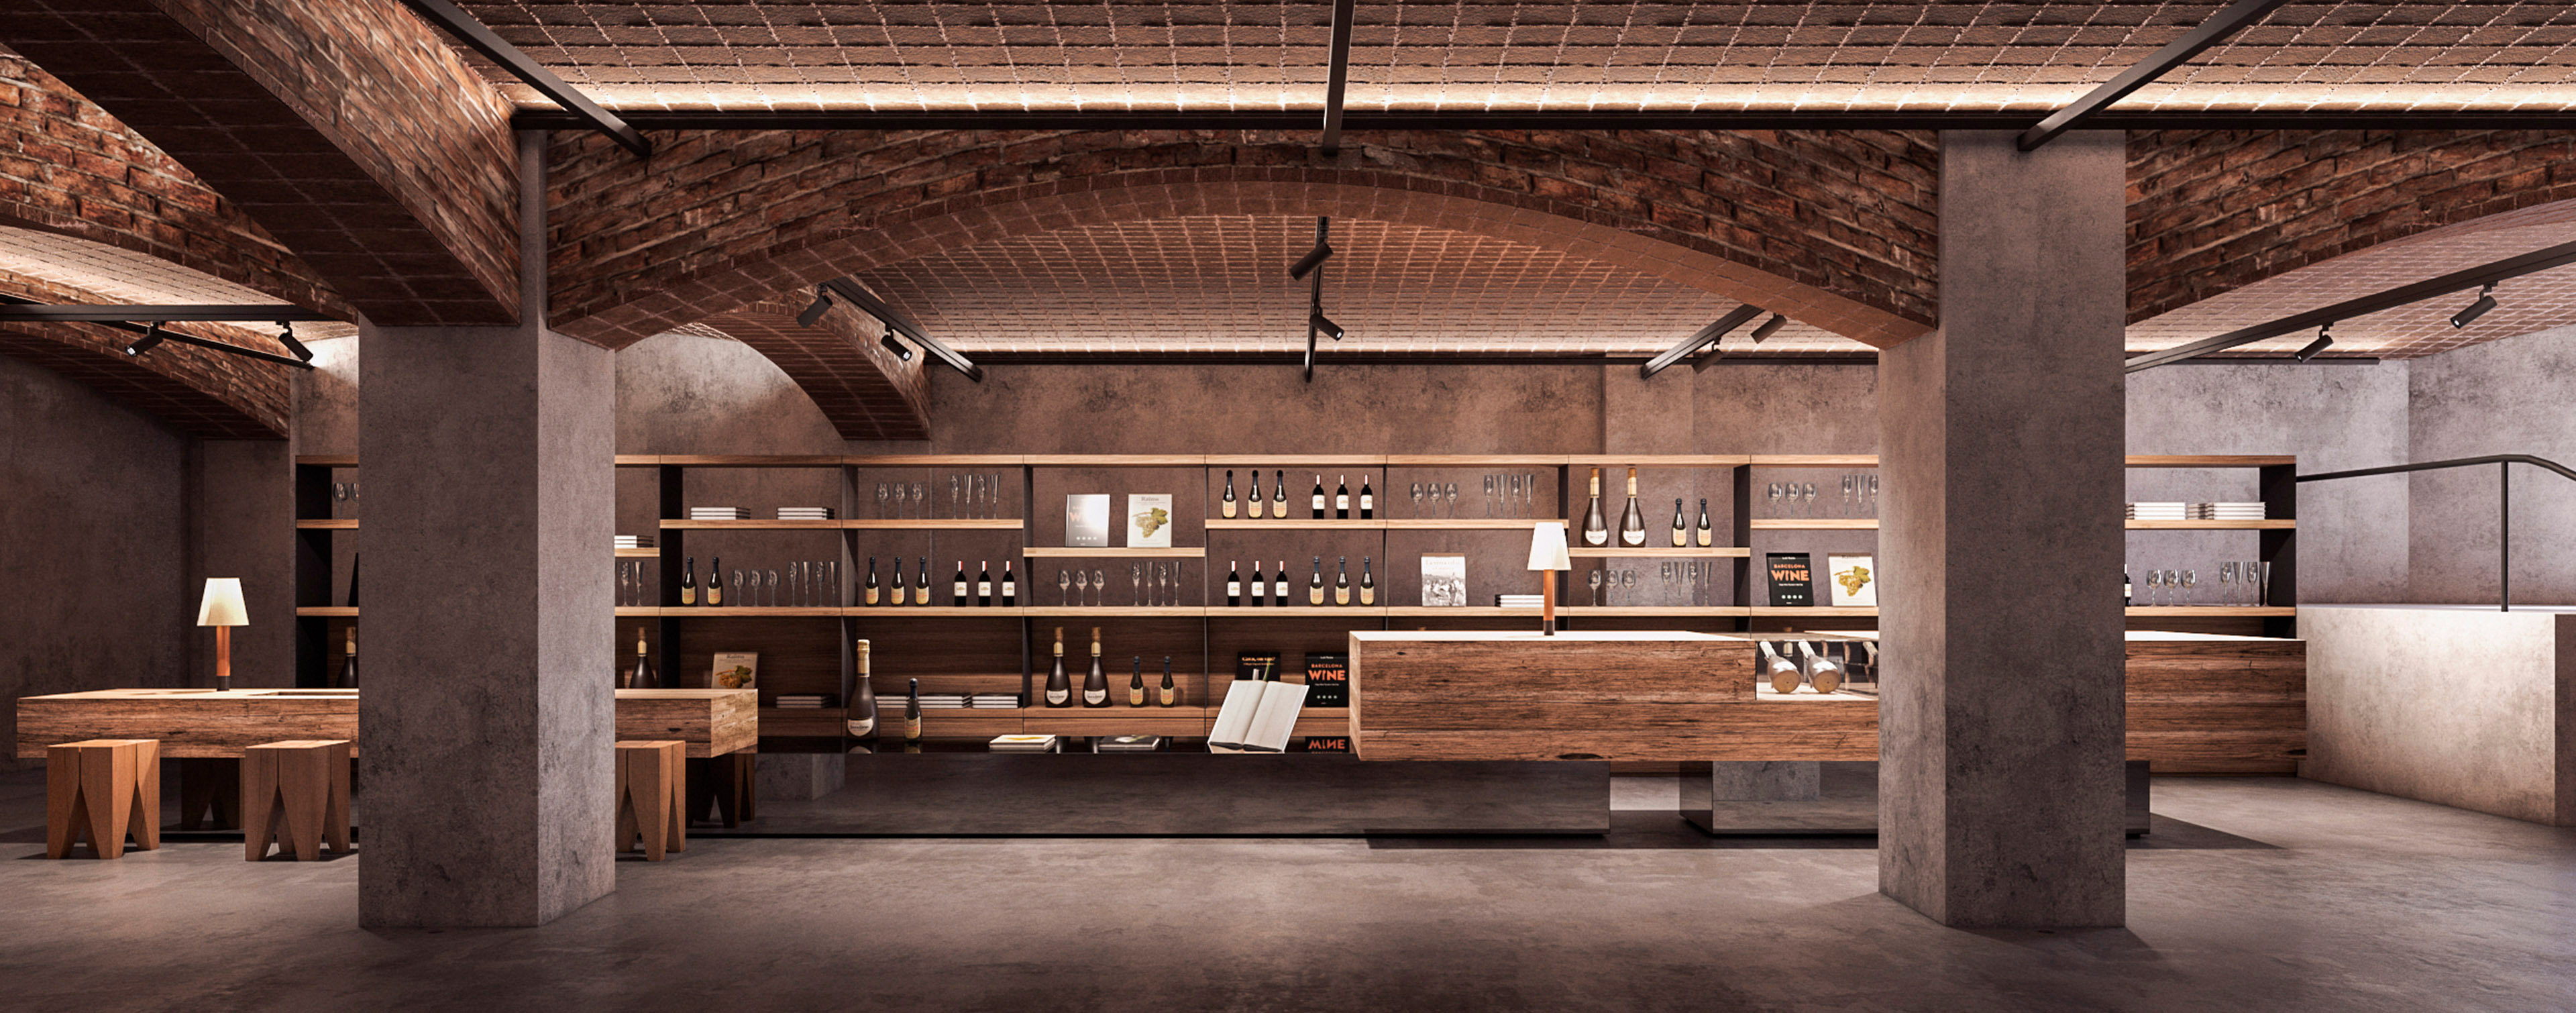 luv studio luxury architects santsadurni juve y camps winery IMG 01 - LUV Studio - Architecture et design - Barcelone